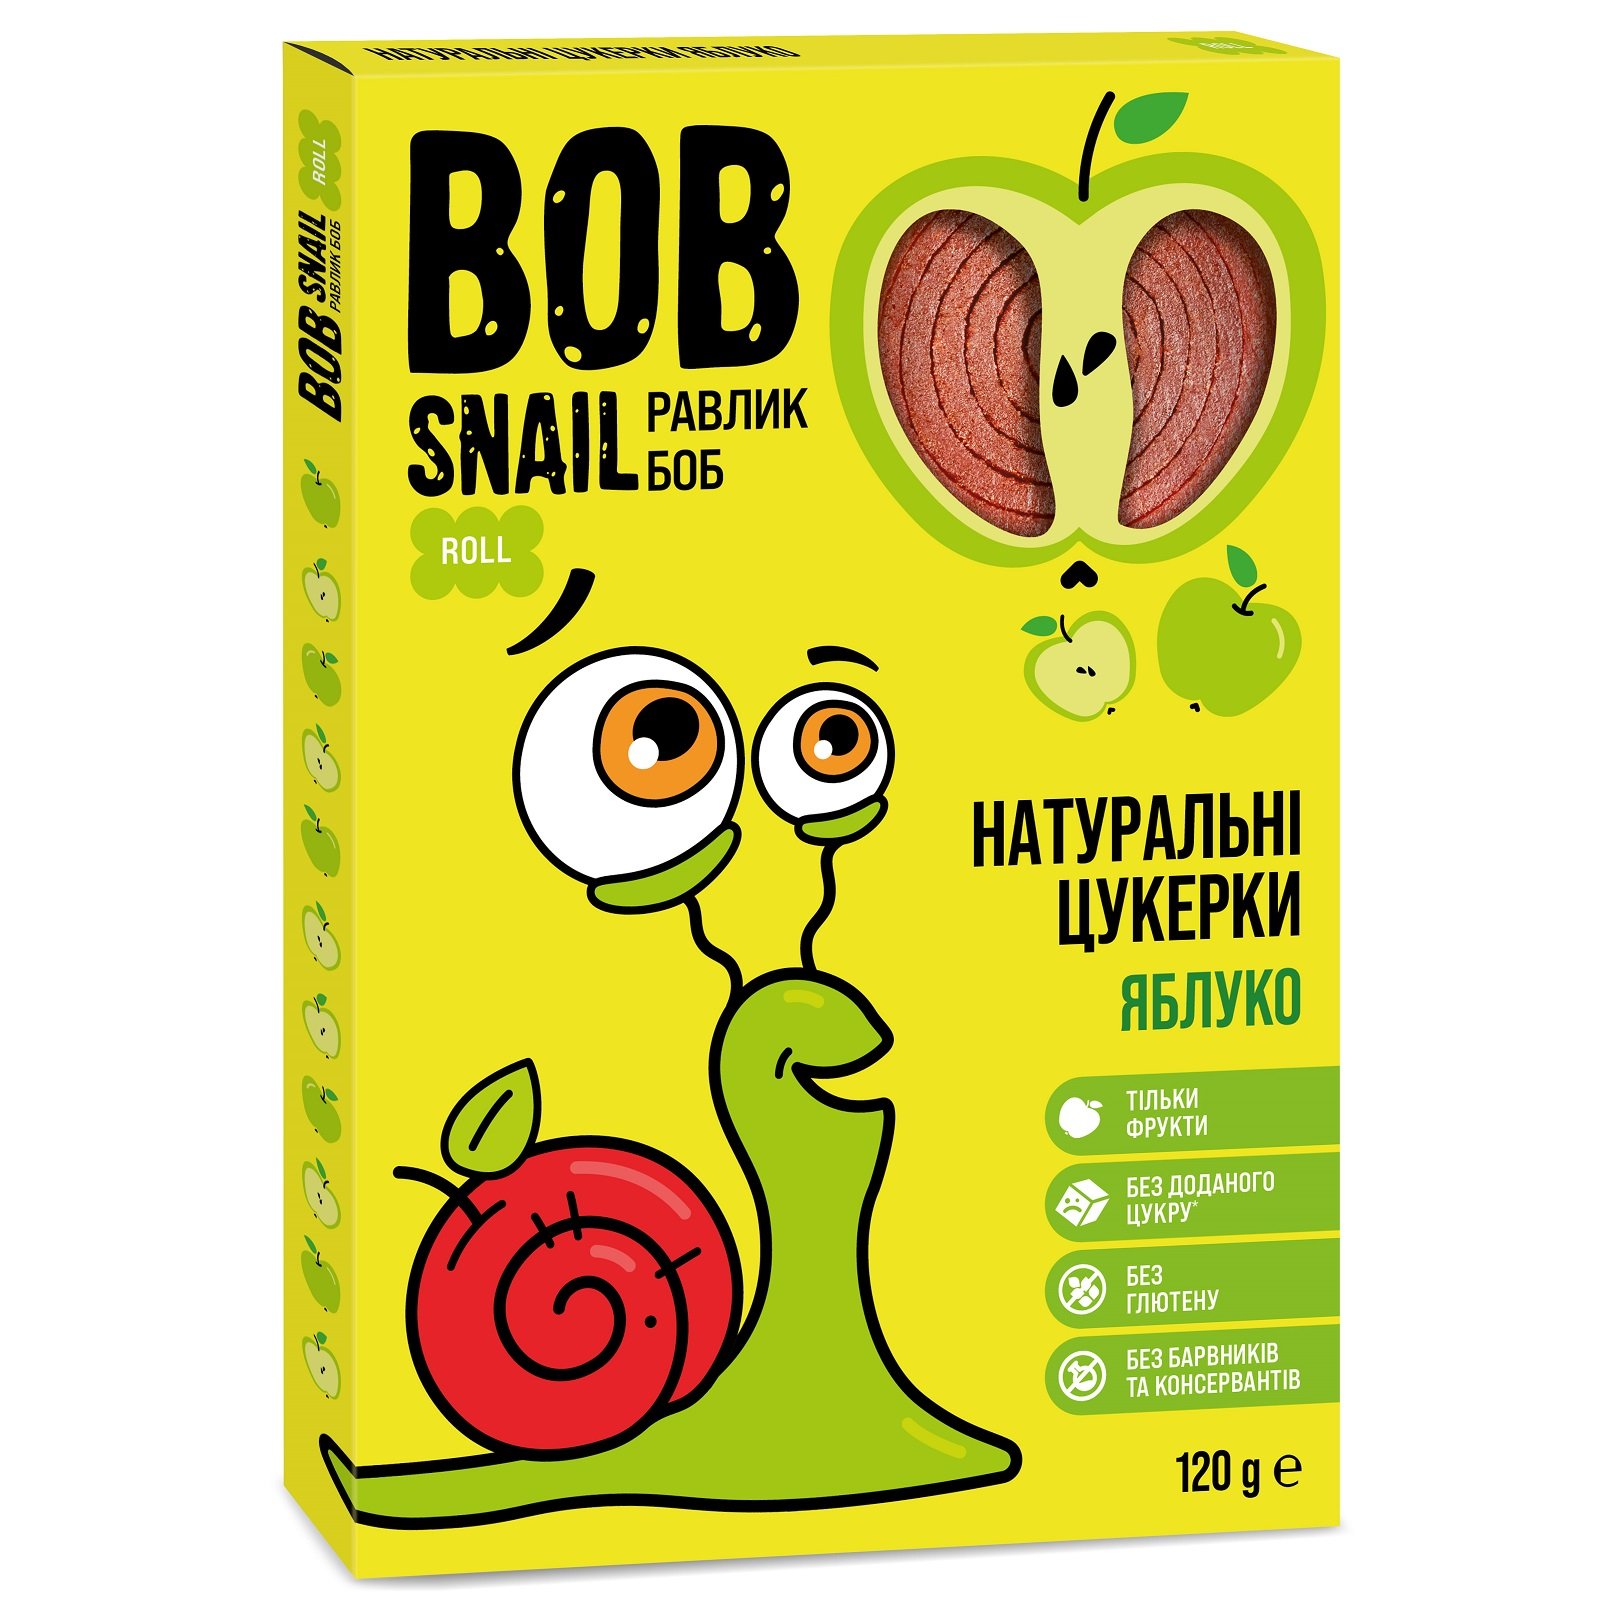 Натуральні цукерки Bob Snail Яблуко, 120 г - фото 1